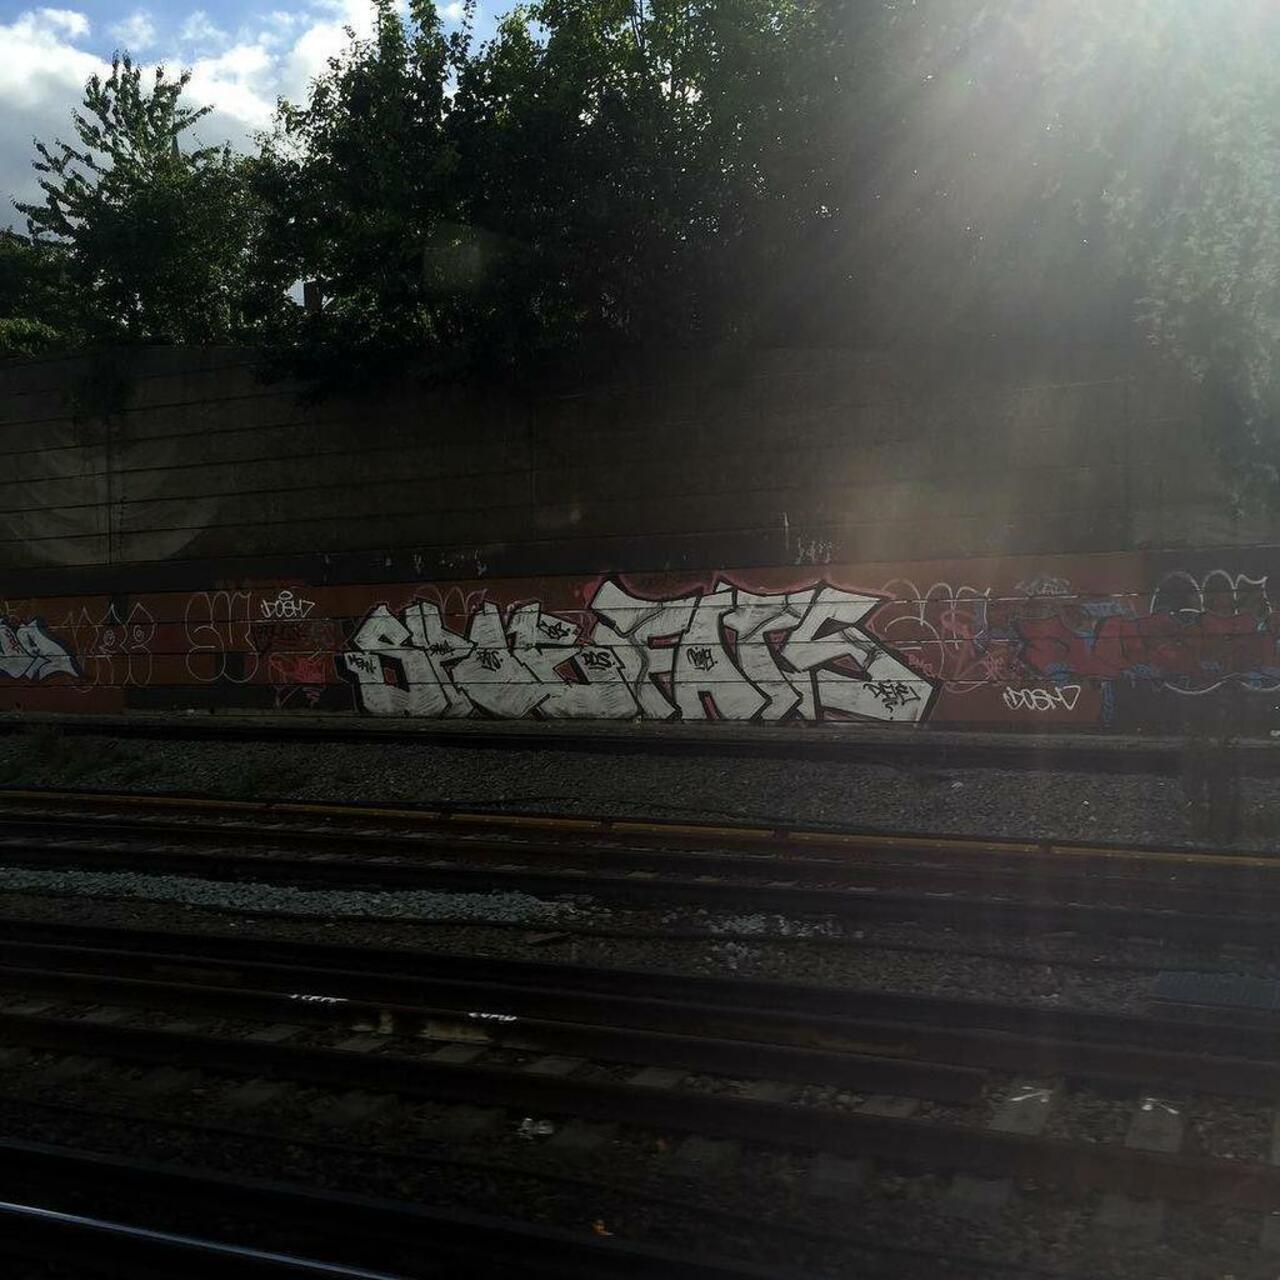 RT @artpushr: via #keepitmoving116 "http://ift.tt/1KJL2TJ" #graffiti #streetart http://t.co/Qx2Qy731pV